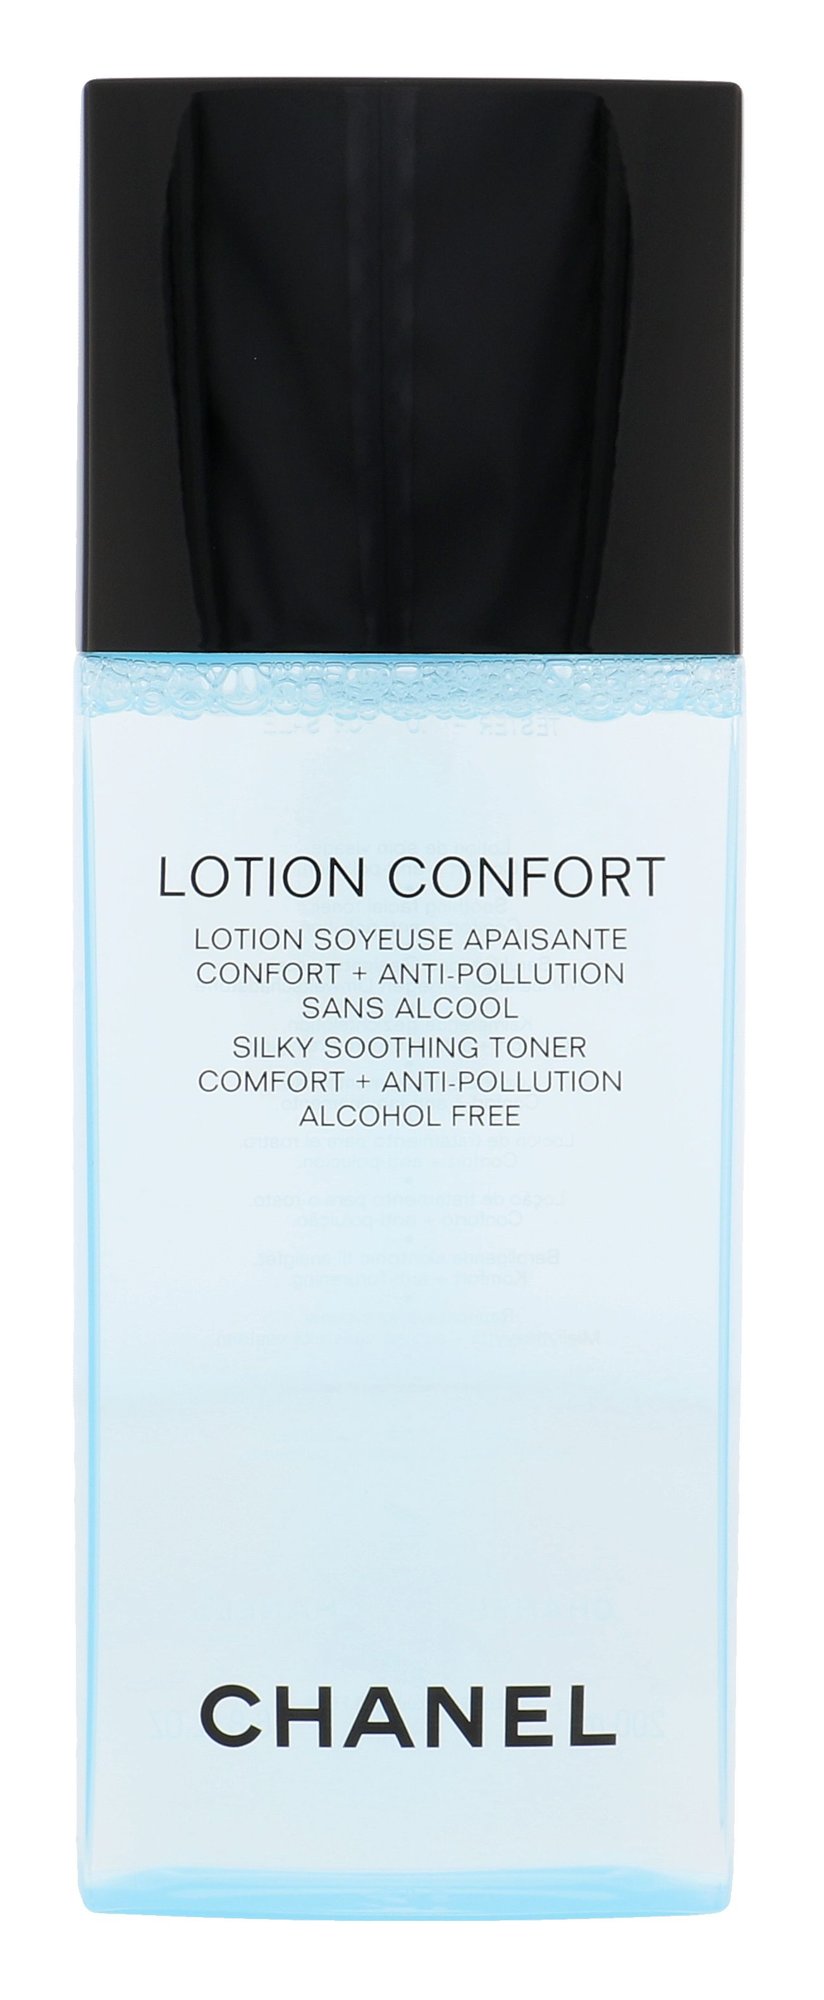 Chanel Lotion Confort valomasis vanduo veidui